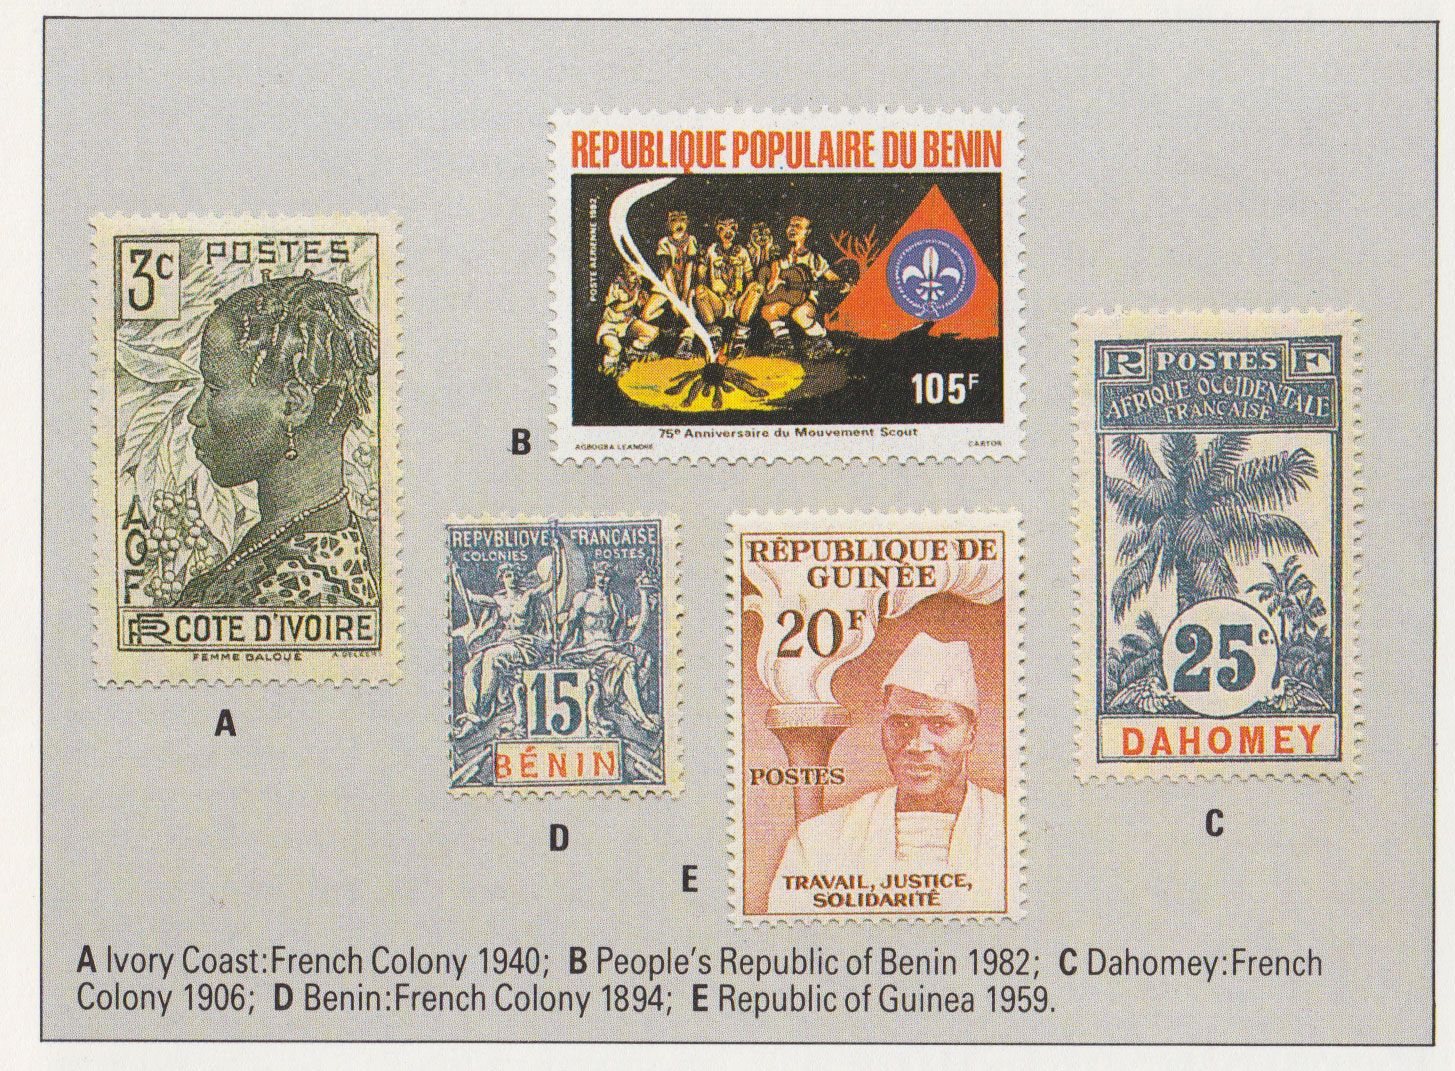 Ivory Coast Benin stamps